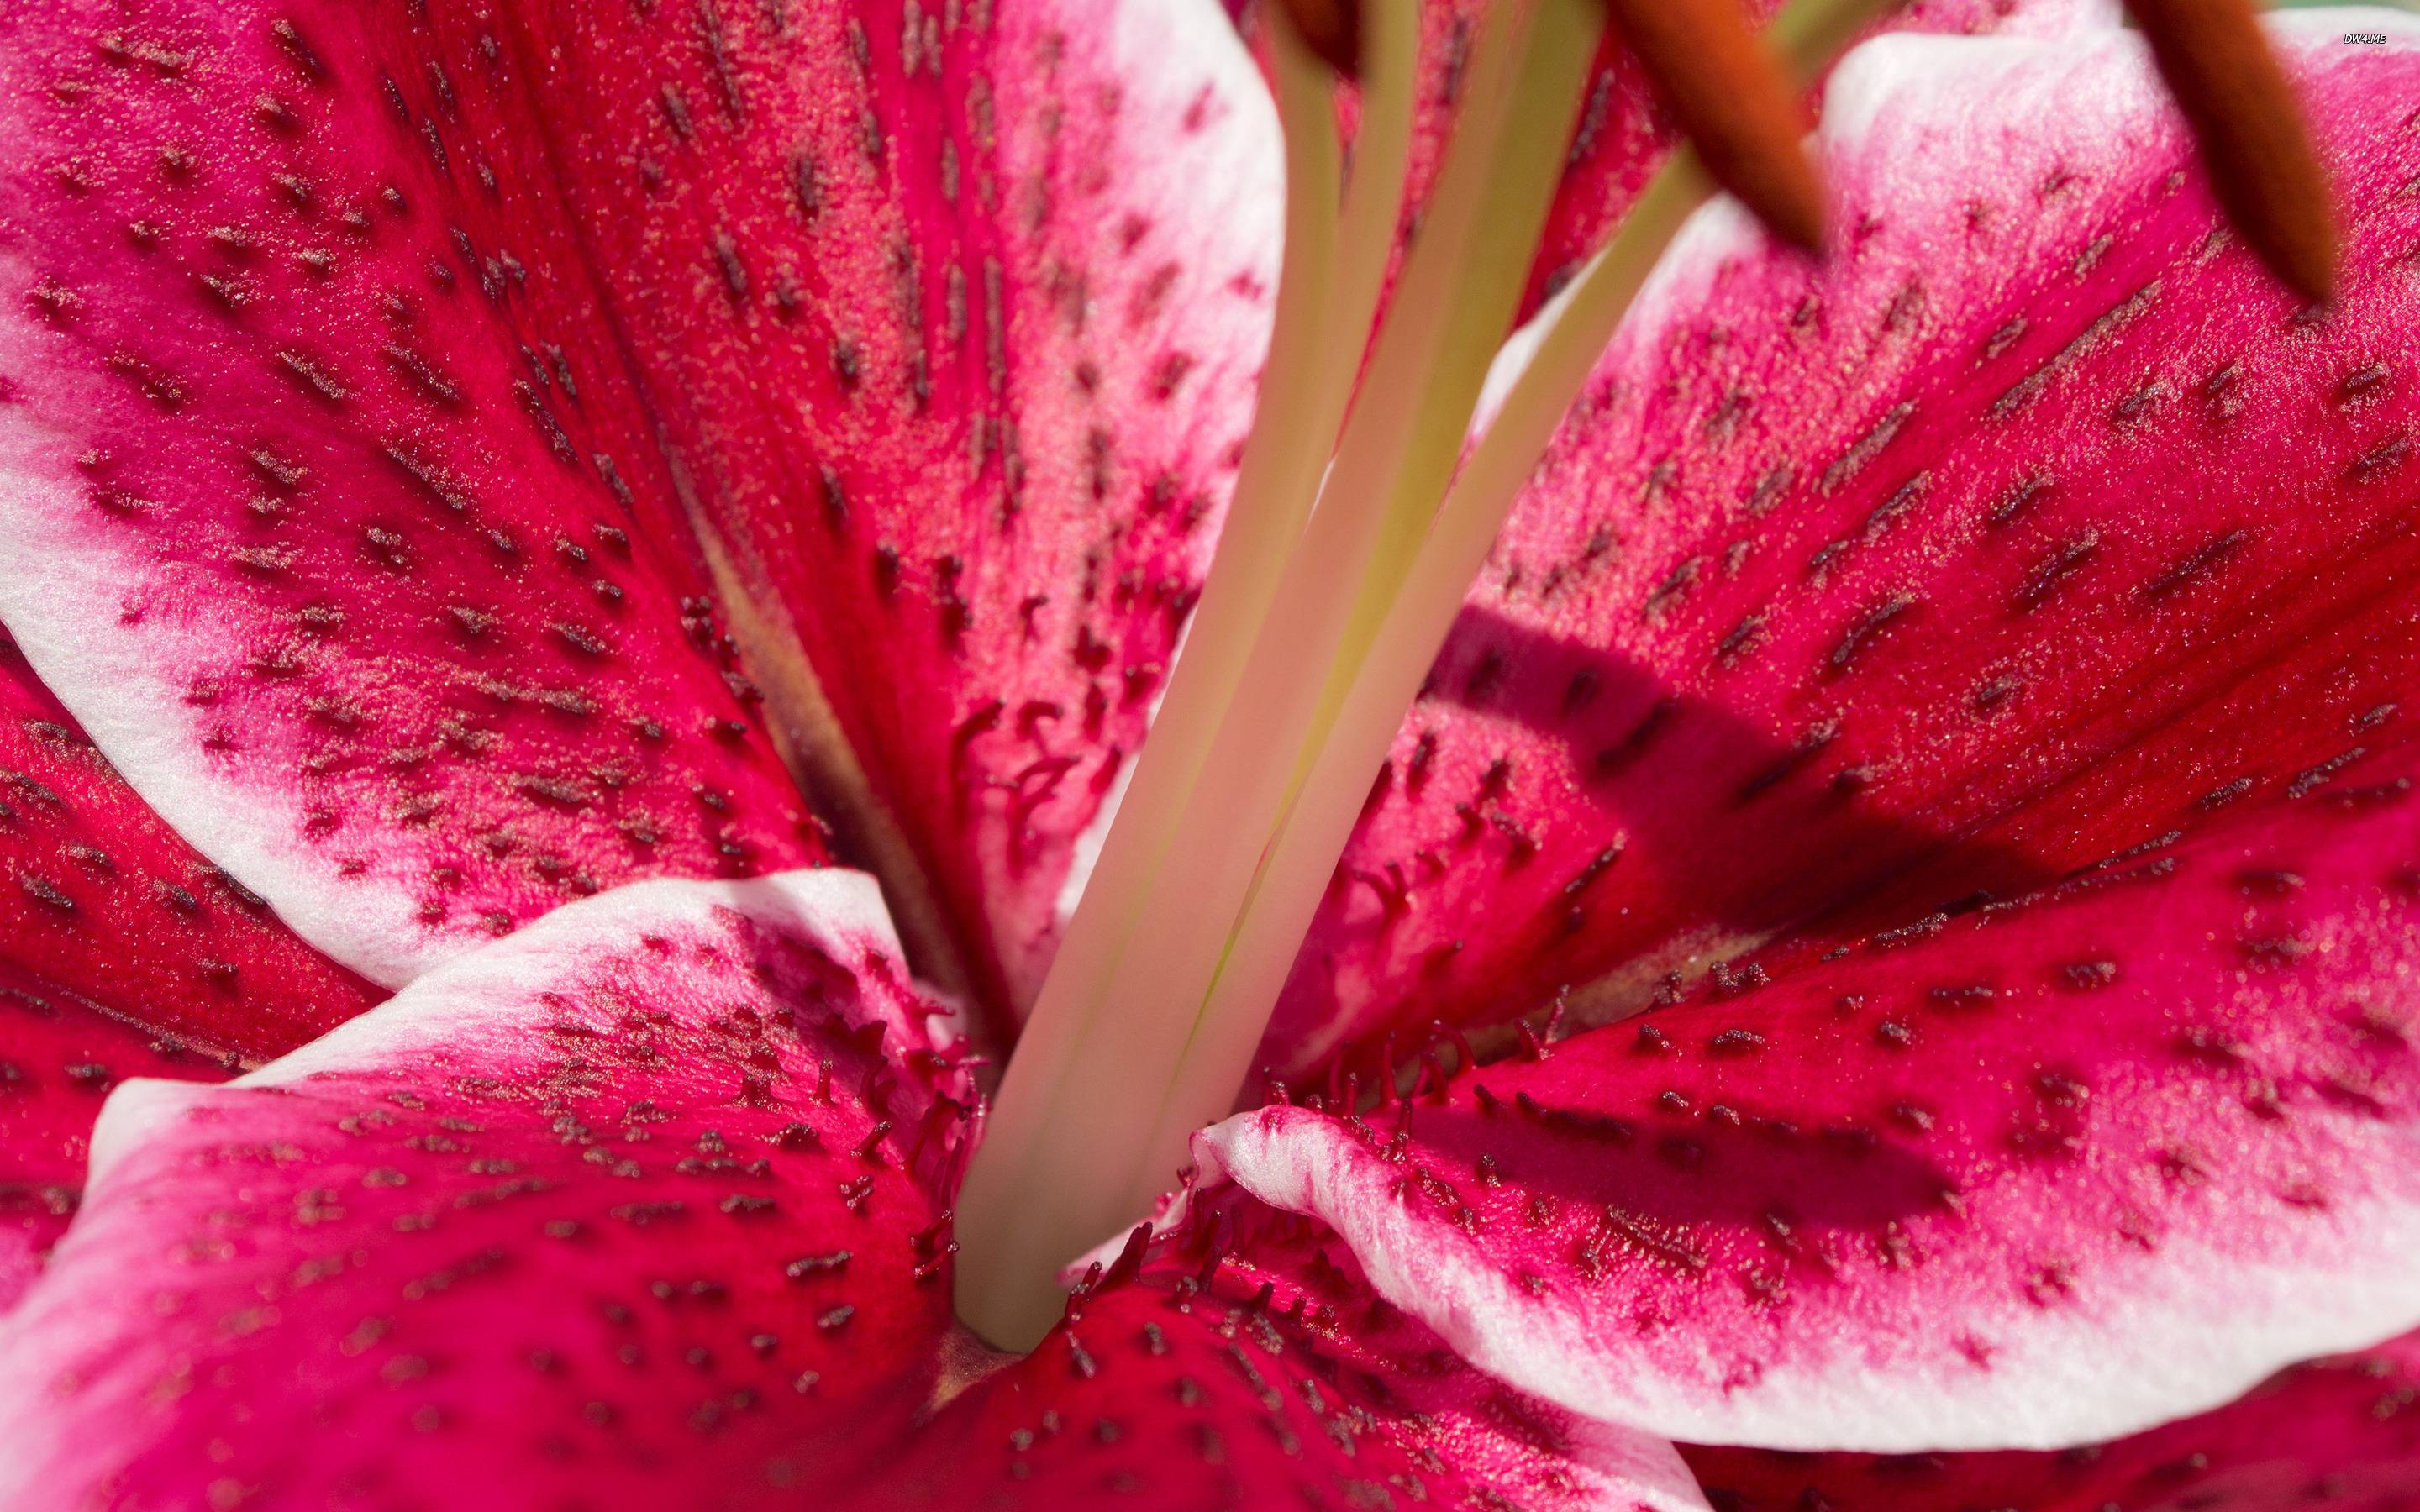 Stargazer Lily Flower